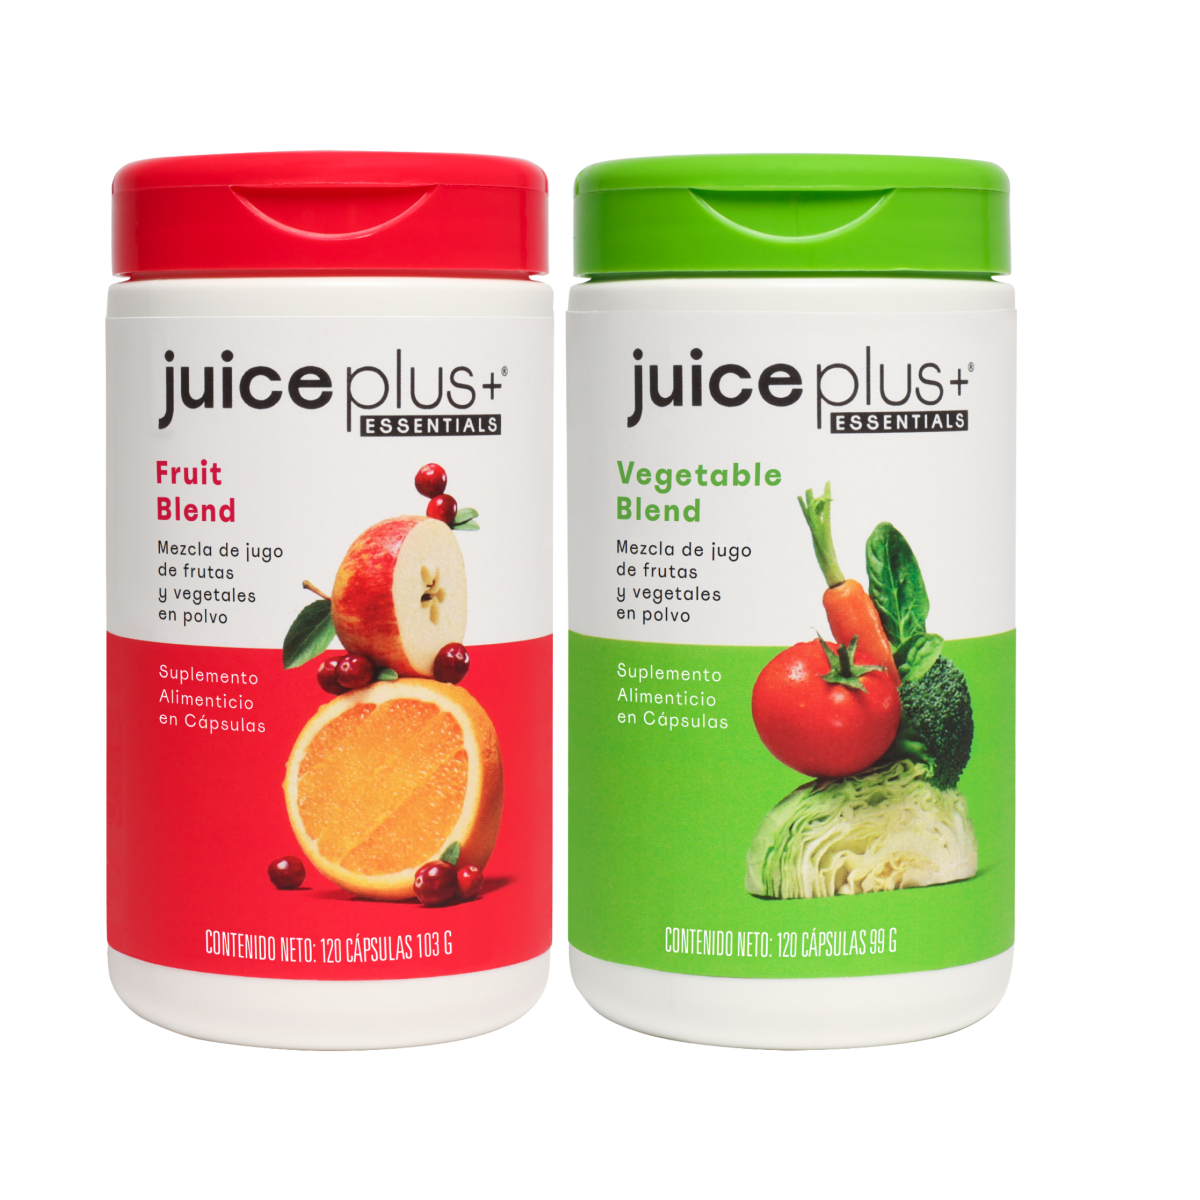 Cápsulas Fruit y Vegetable de Juice Plus+ Juice Plus+